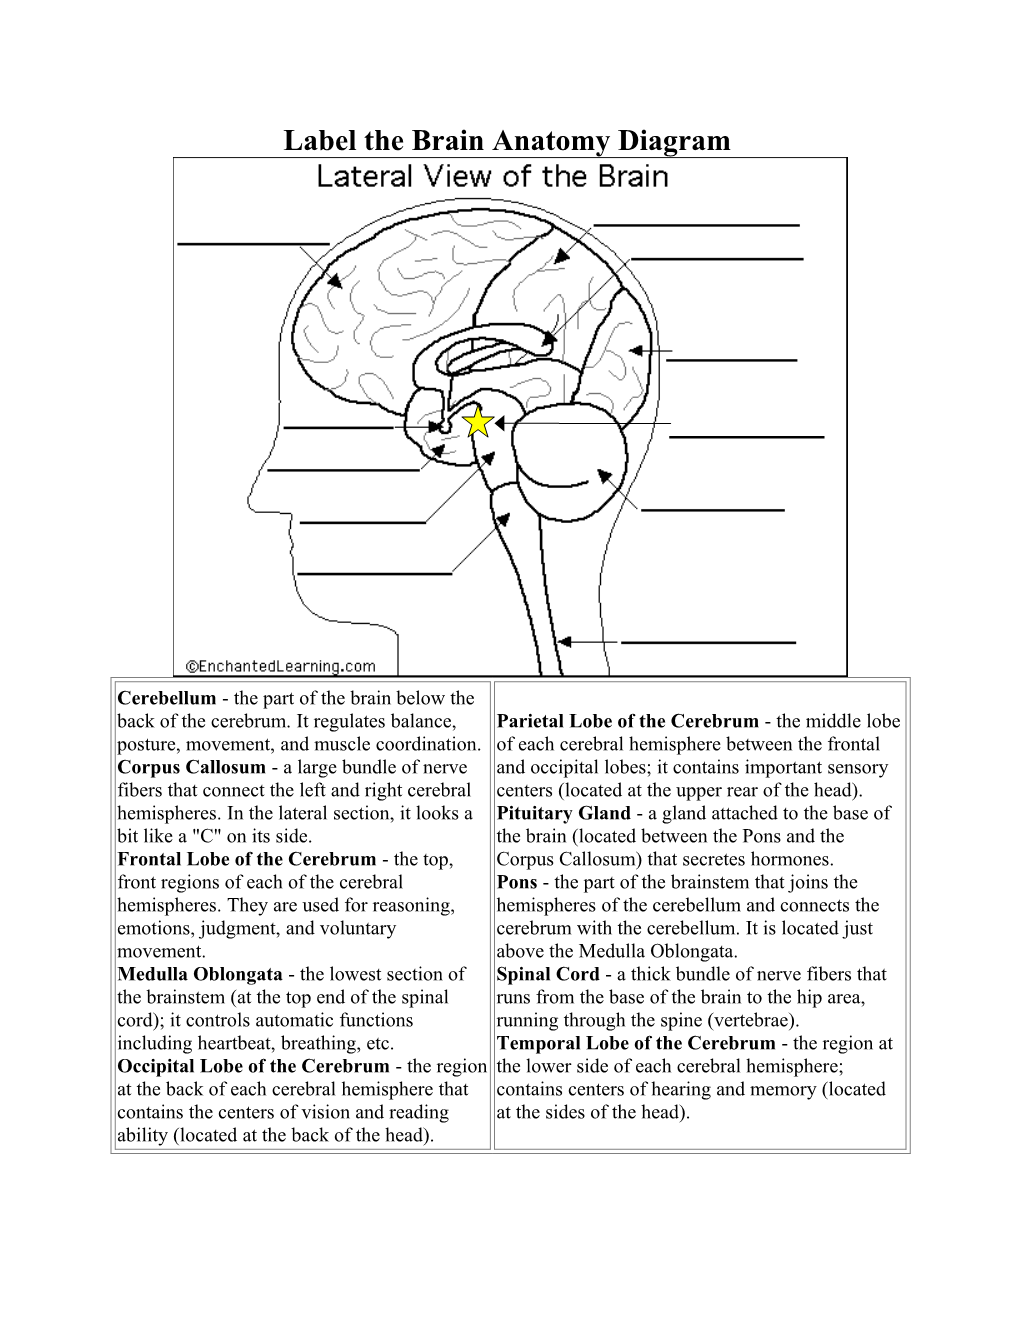 Label the Brain Anatomy Diagram